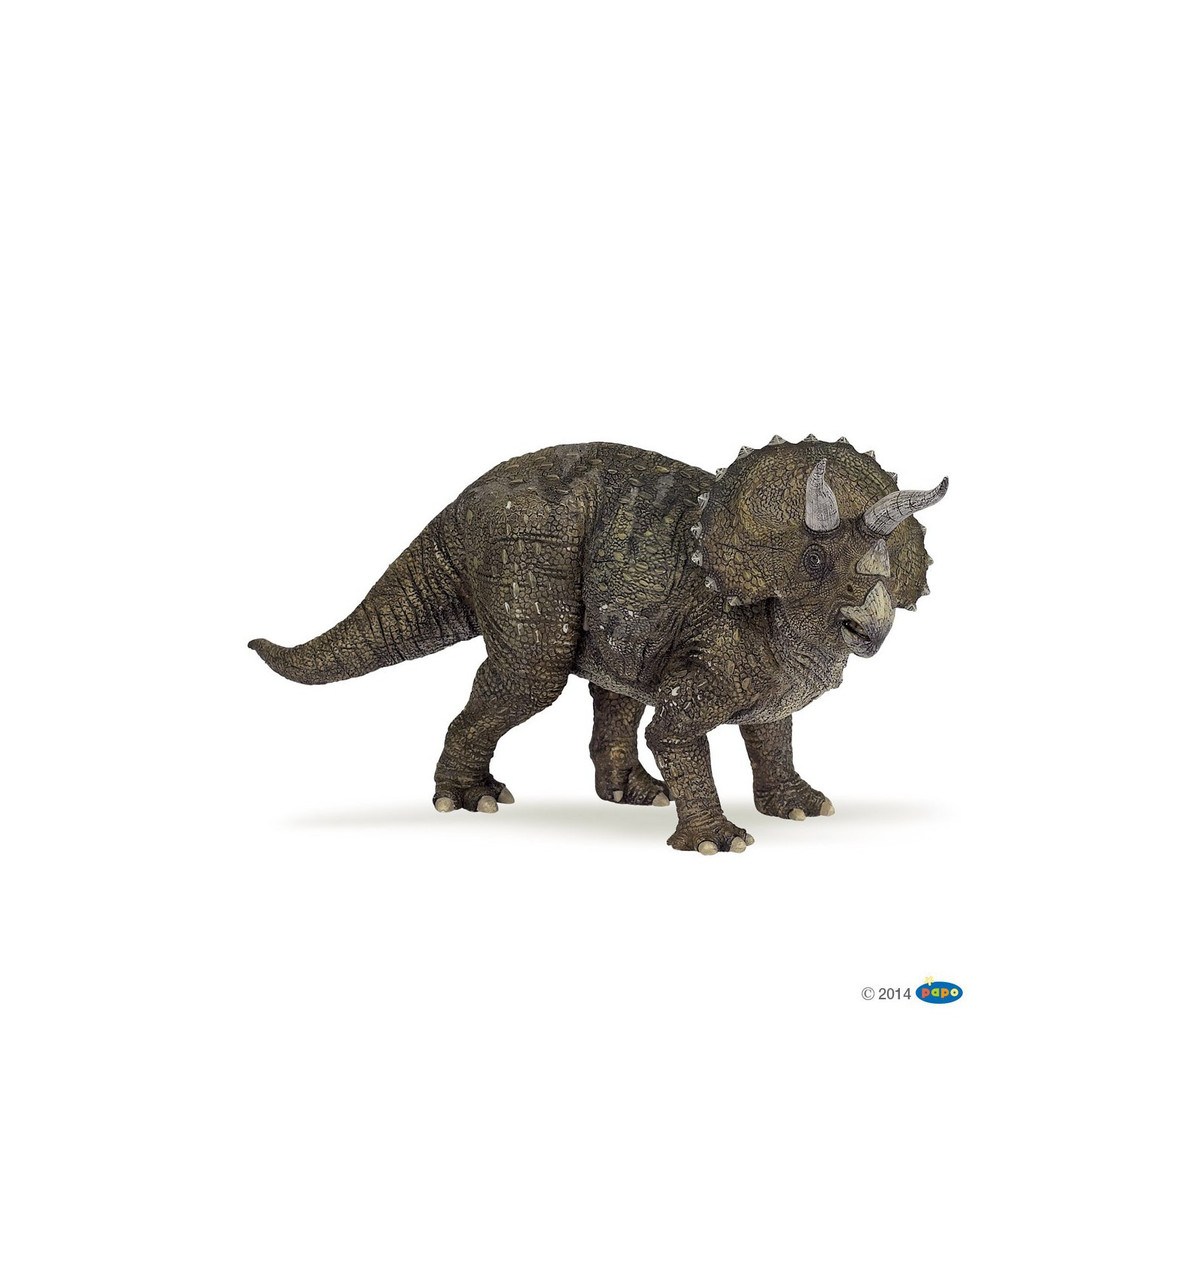 New Hot Wheels 1/64 Monster Trucks Jurassic World Series Triceratops  Dinosaur